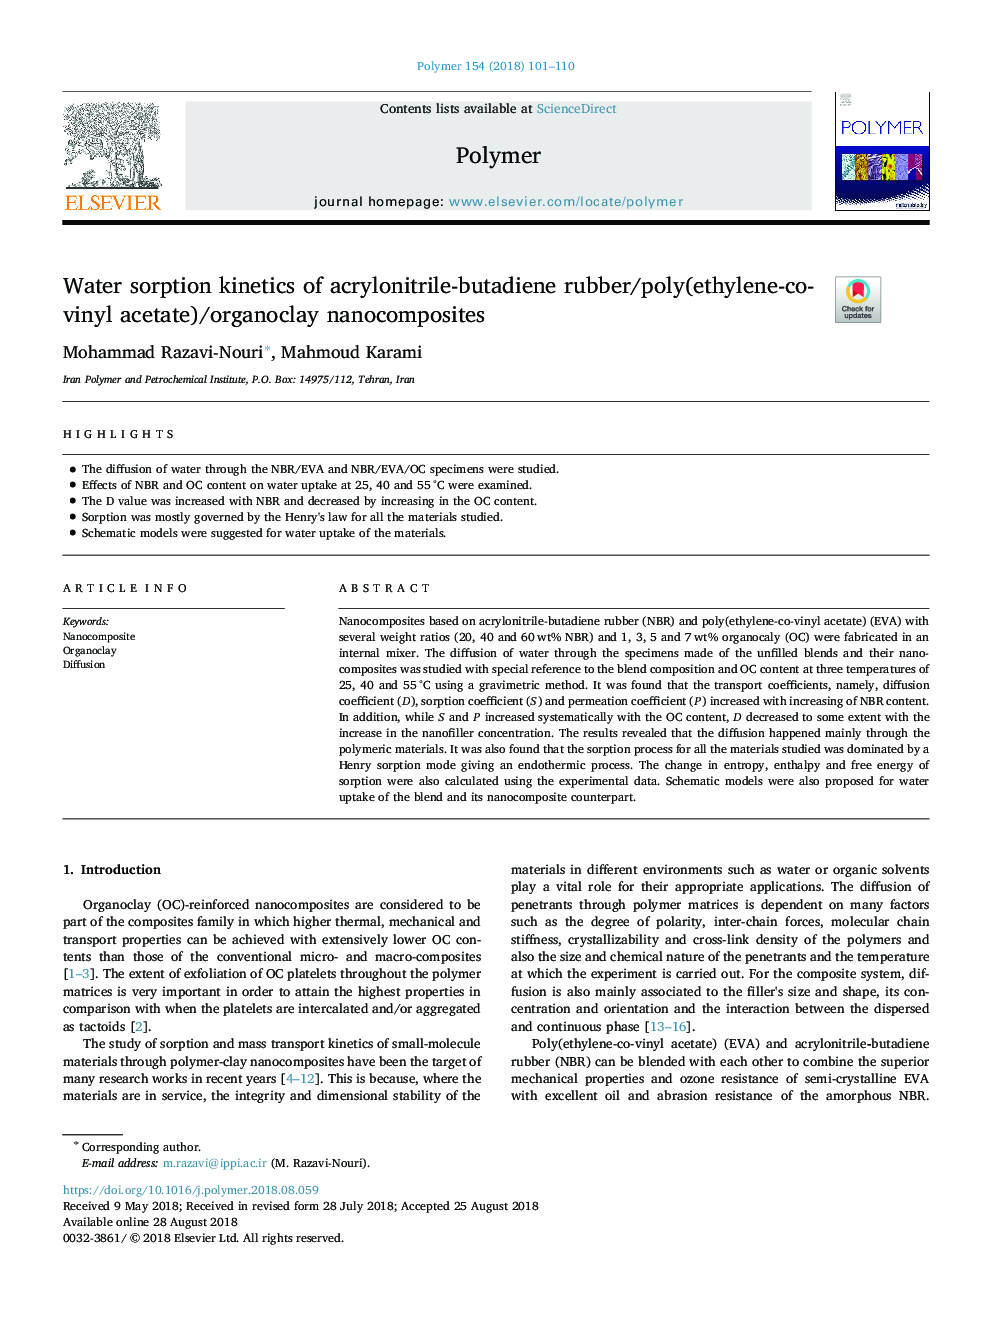 Water sorption kinetics of acrylonitrile-butadiene rubber/poly(ethylene-co-vinyl acetate)/organoclay nanocomposites